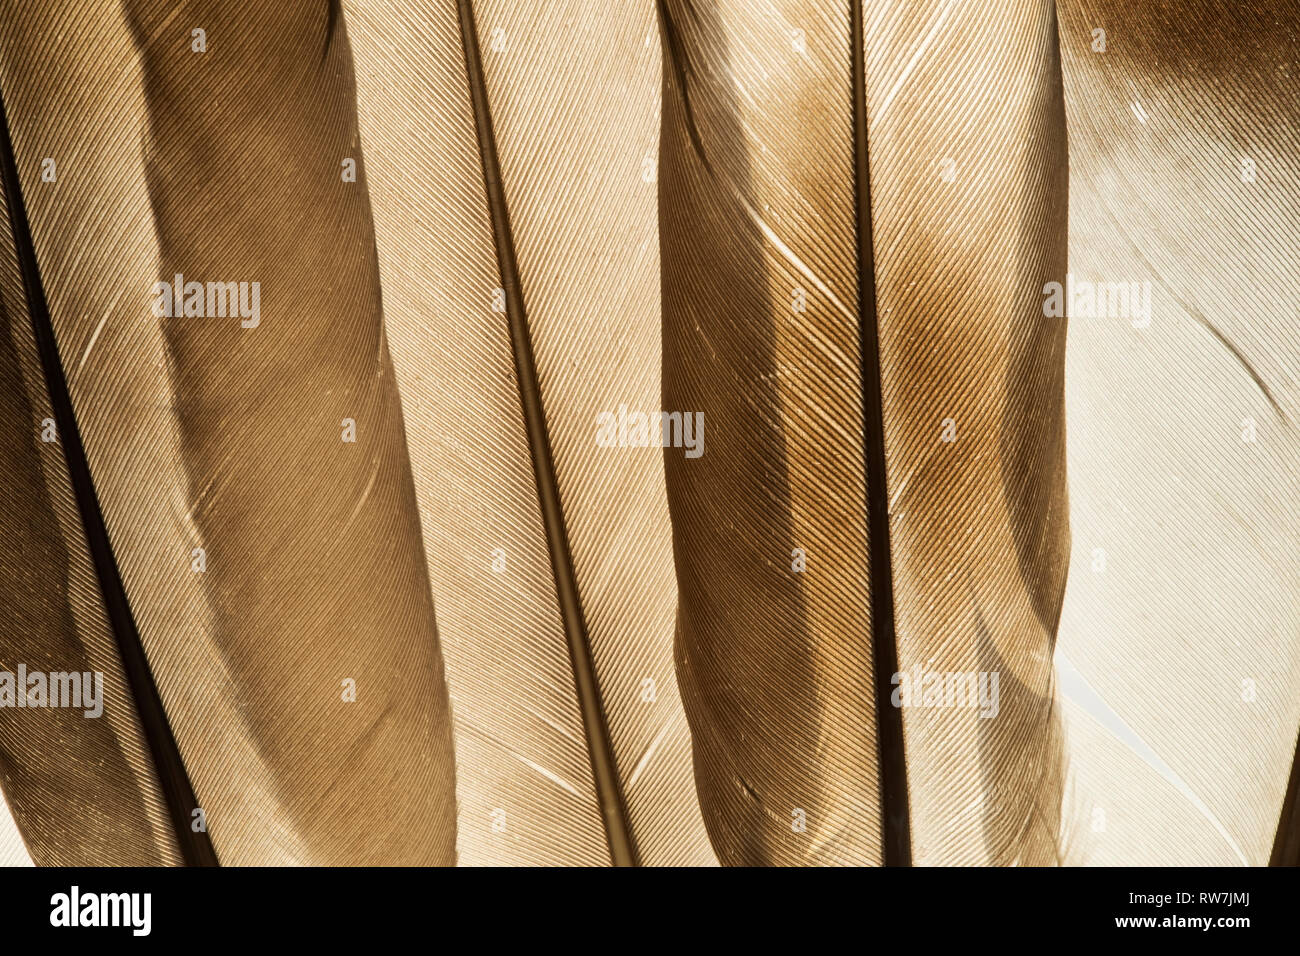 Transparent feathers texture close up Stock Photo